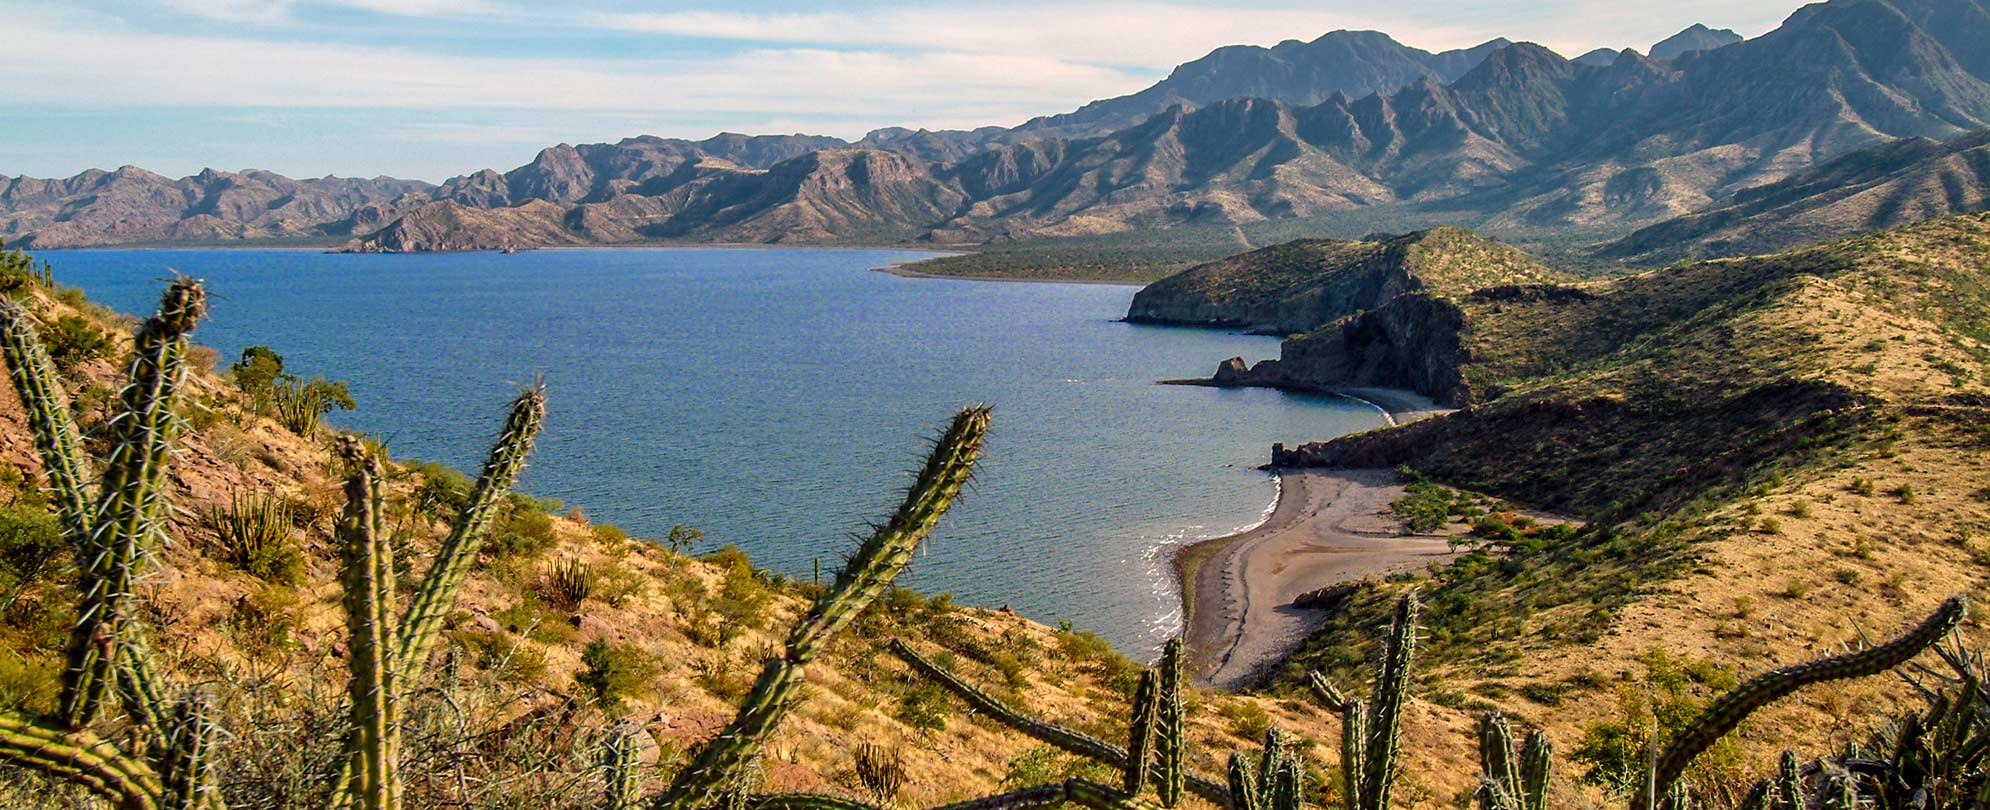 The Baja California Sur